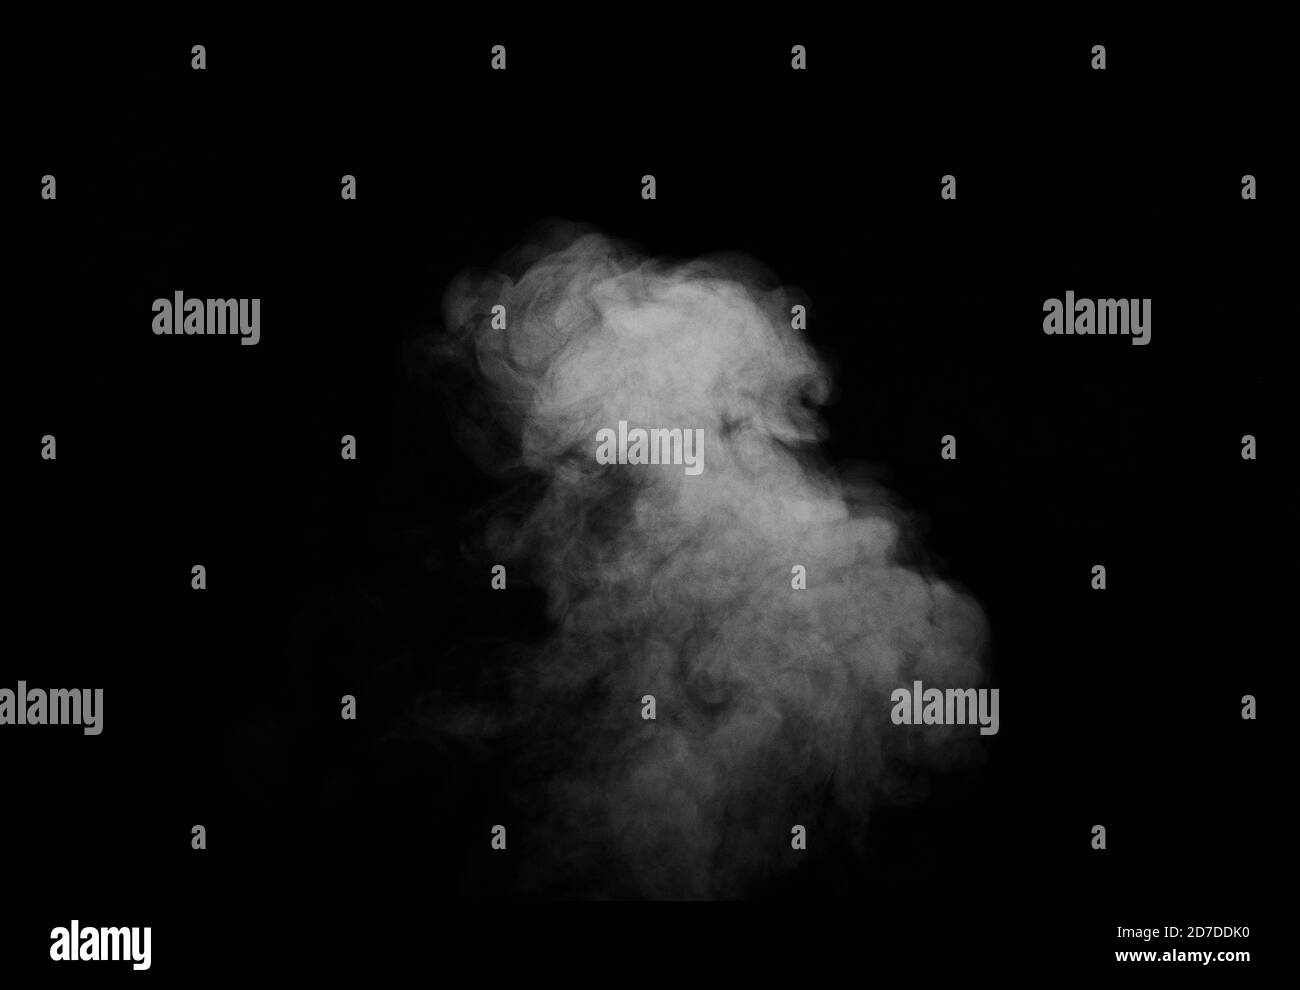 White smoke on black background. Figured smoke on a dark background. Abstract background, design element Stock Photo